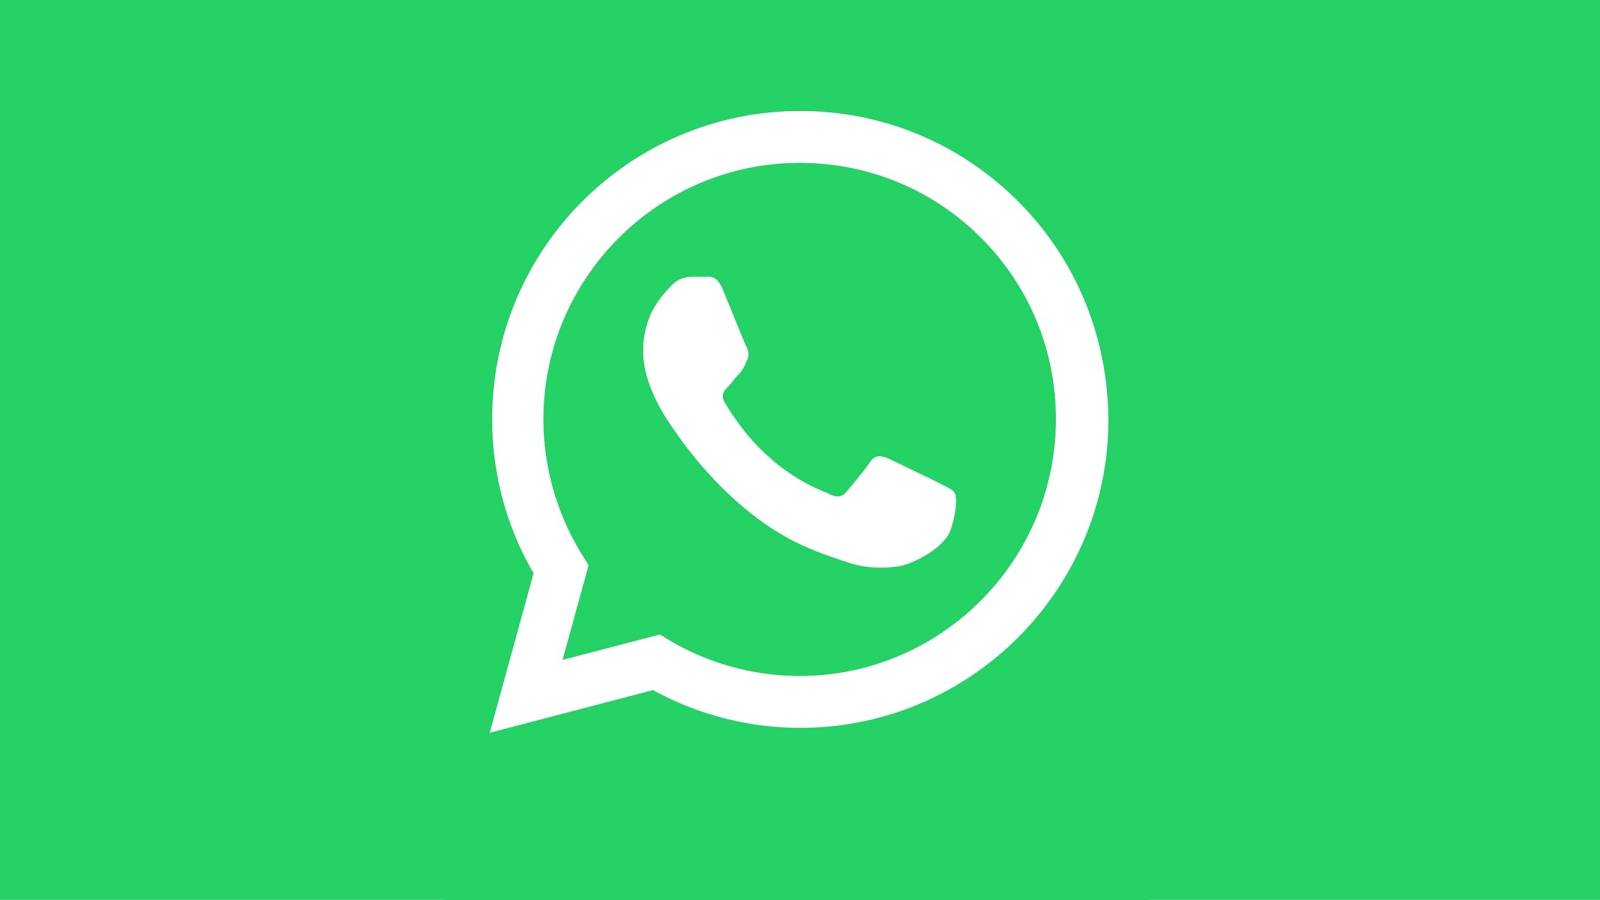 WhatsApp-delning